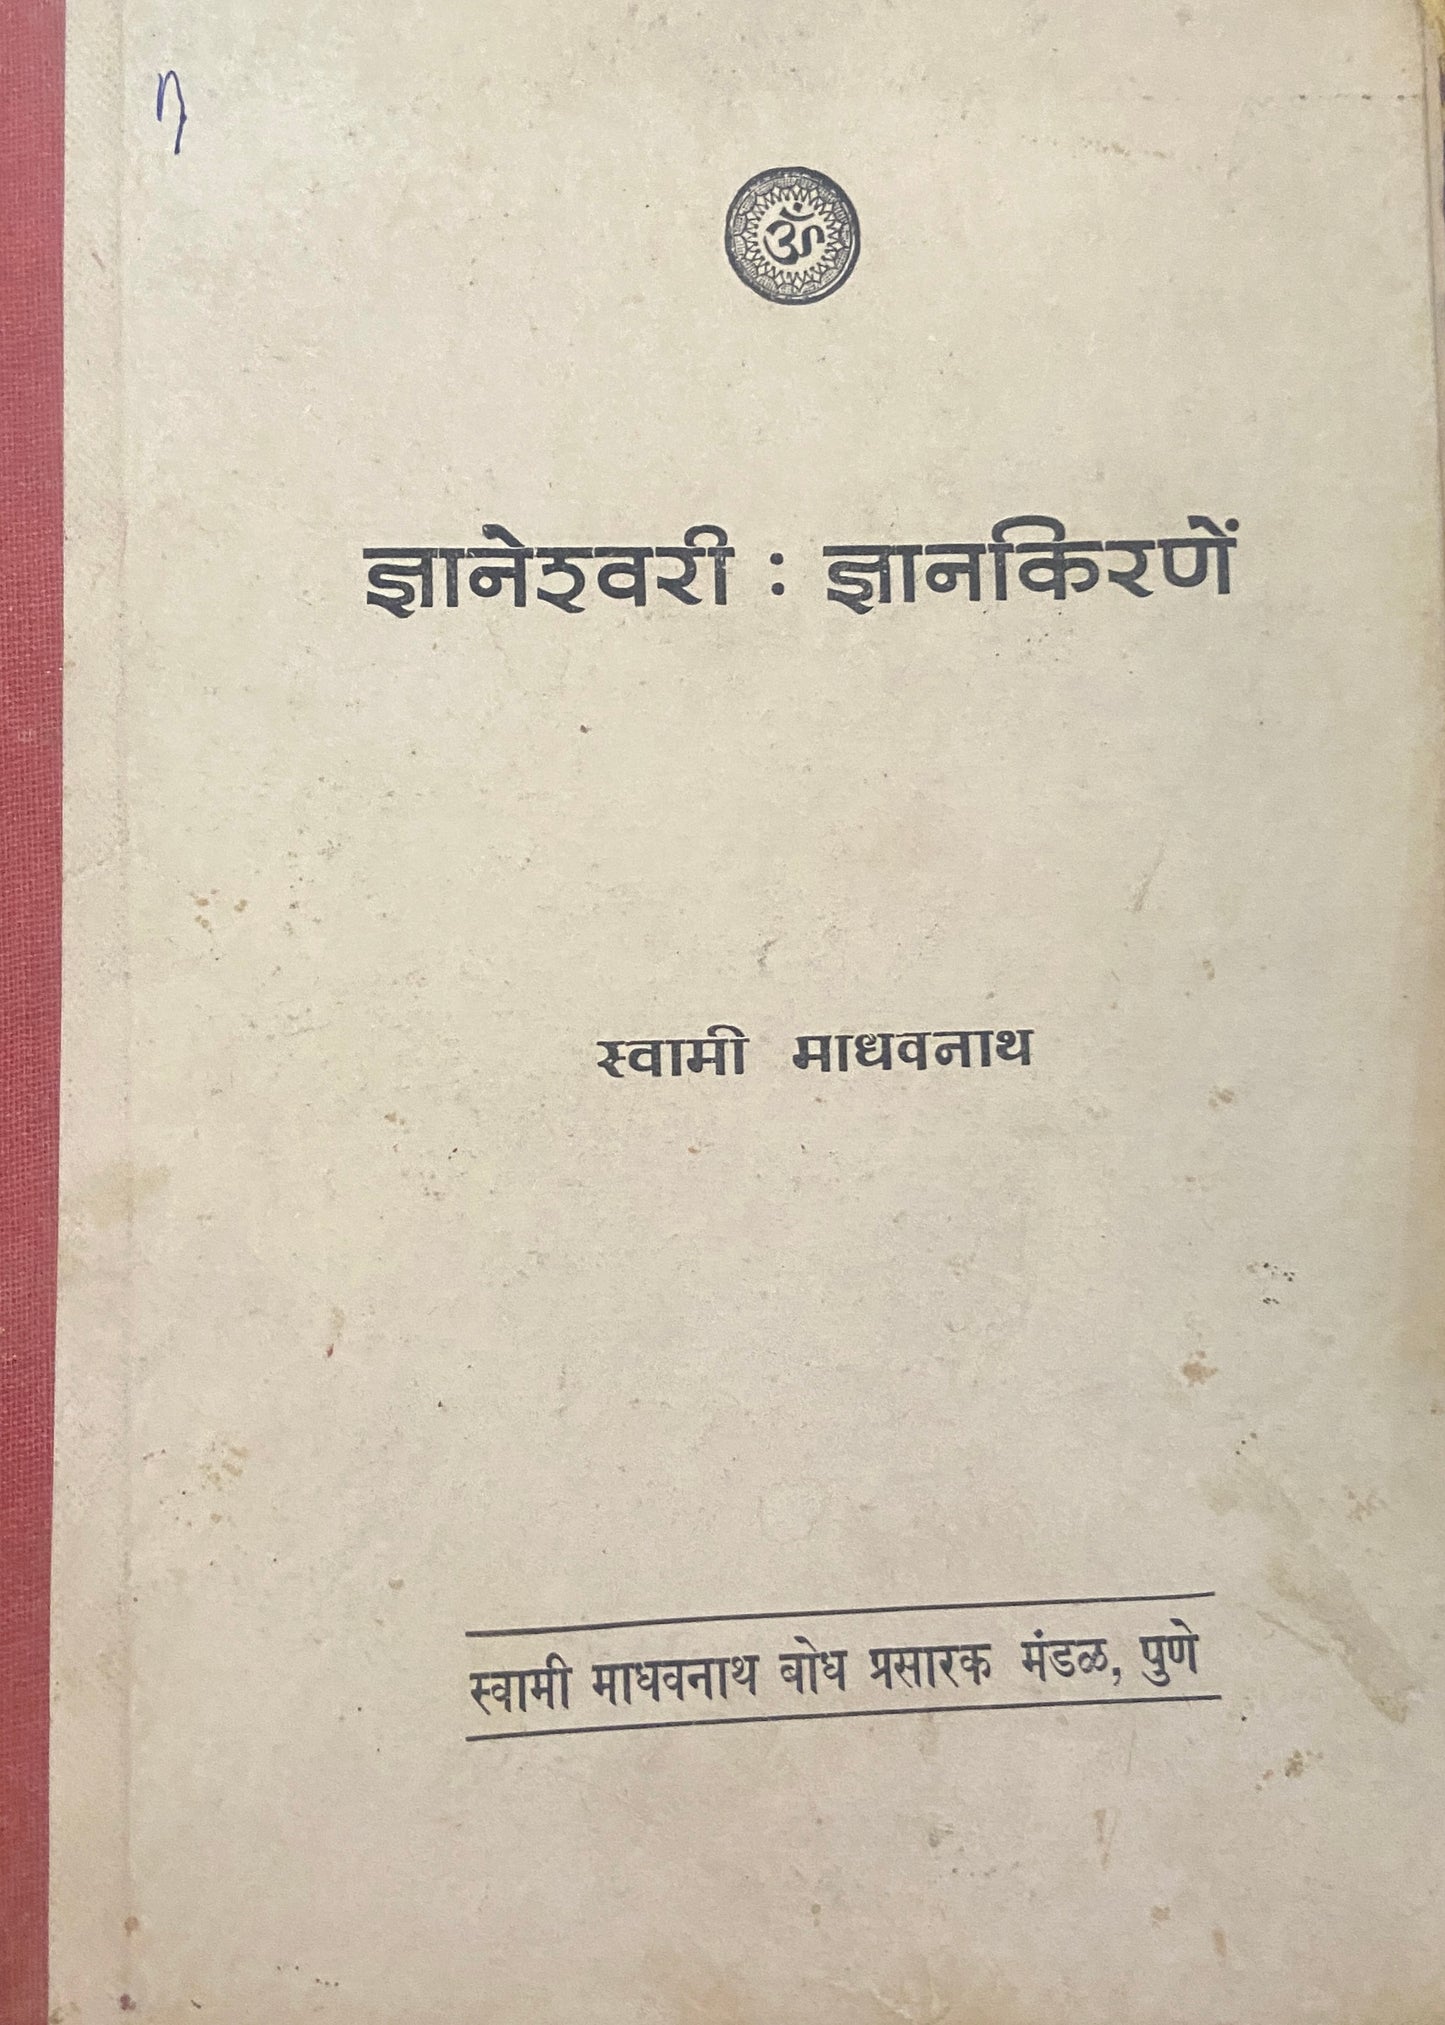 Dnyaneshwari Dnyankirane by Swami Madhavnath (D)